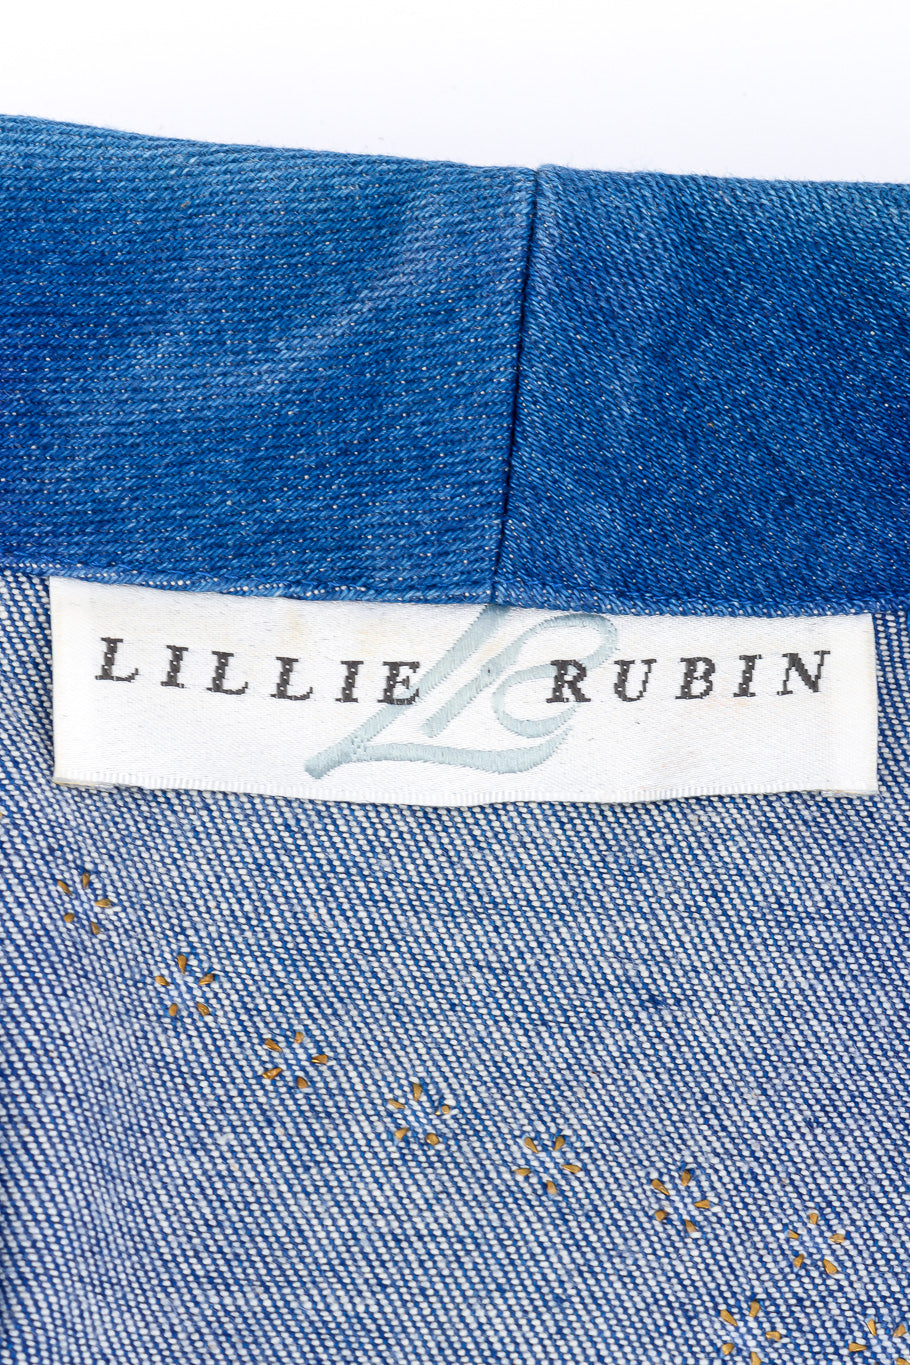 Vintage Lillie Rubin Crystal Studded Denim Jacket signature label closeup @Recessla